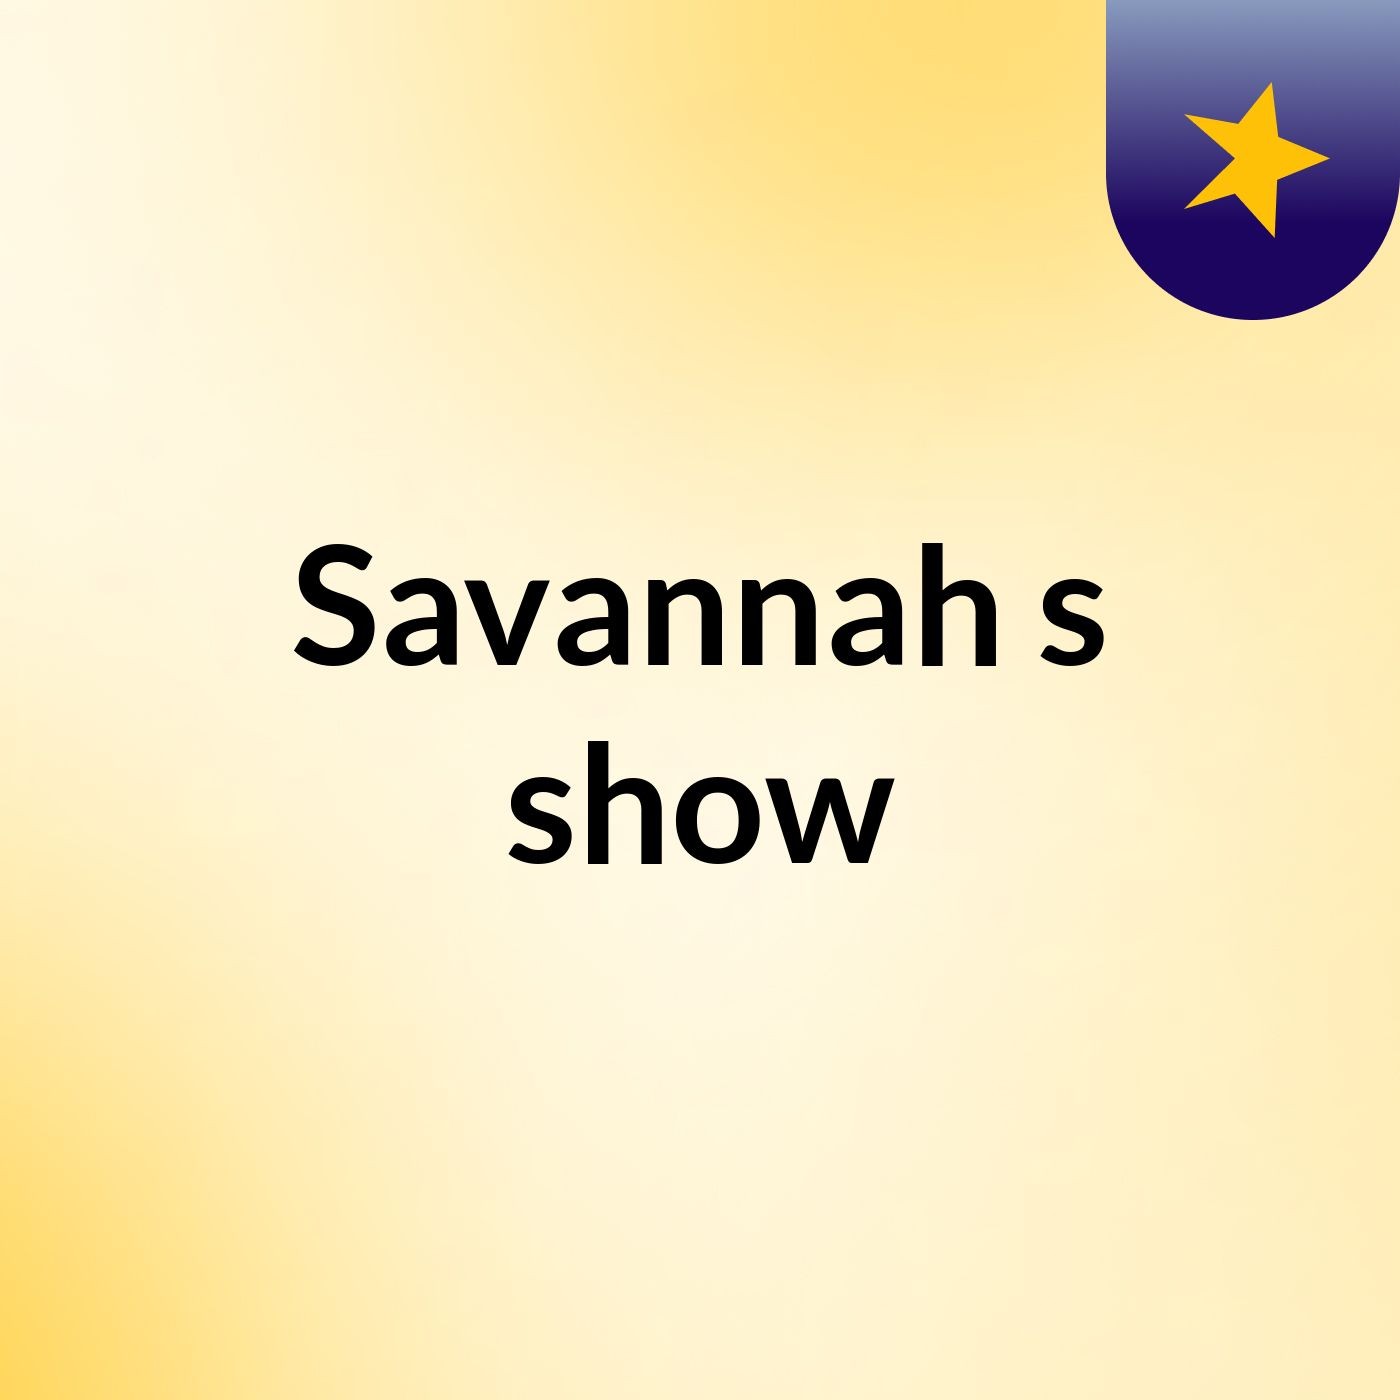 Savannah's show